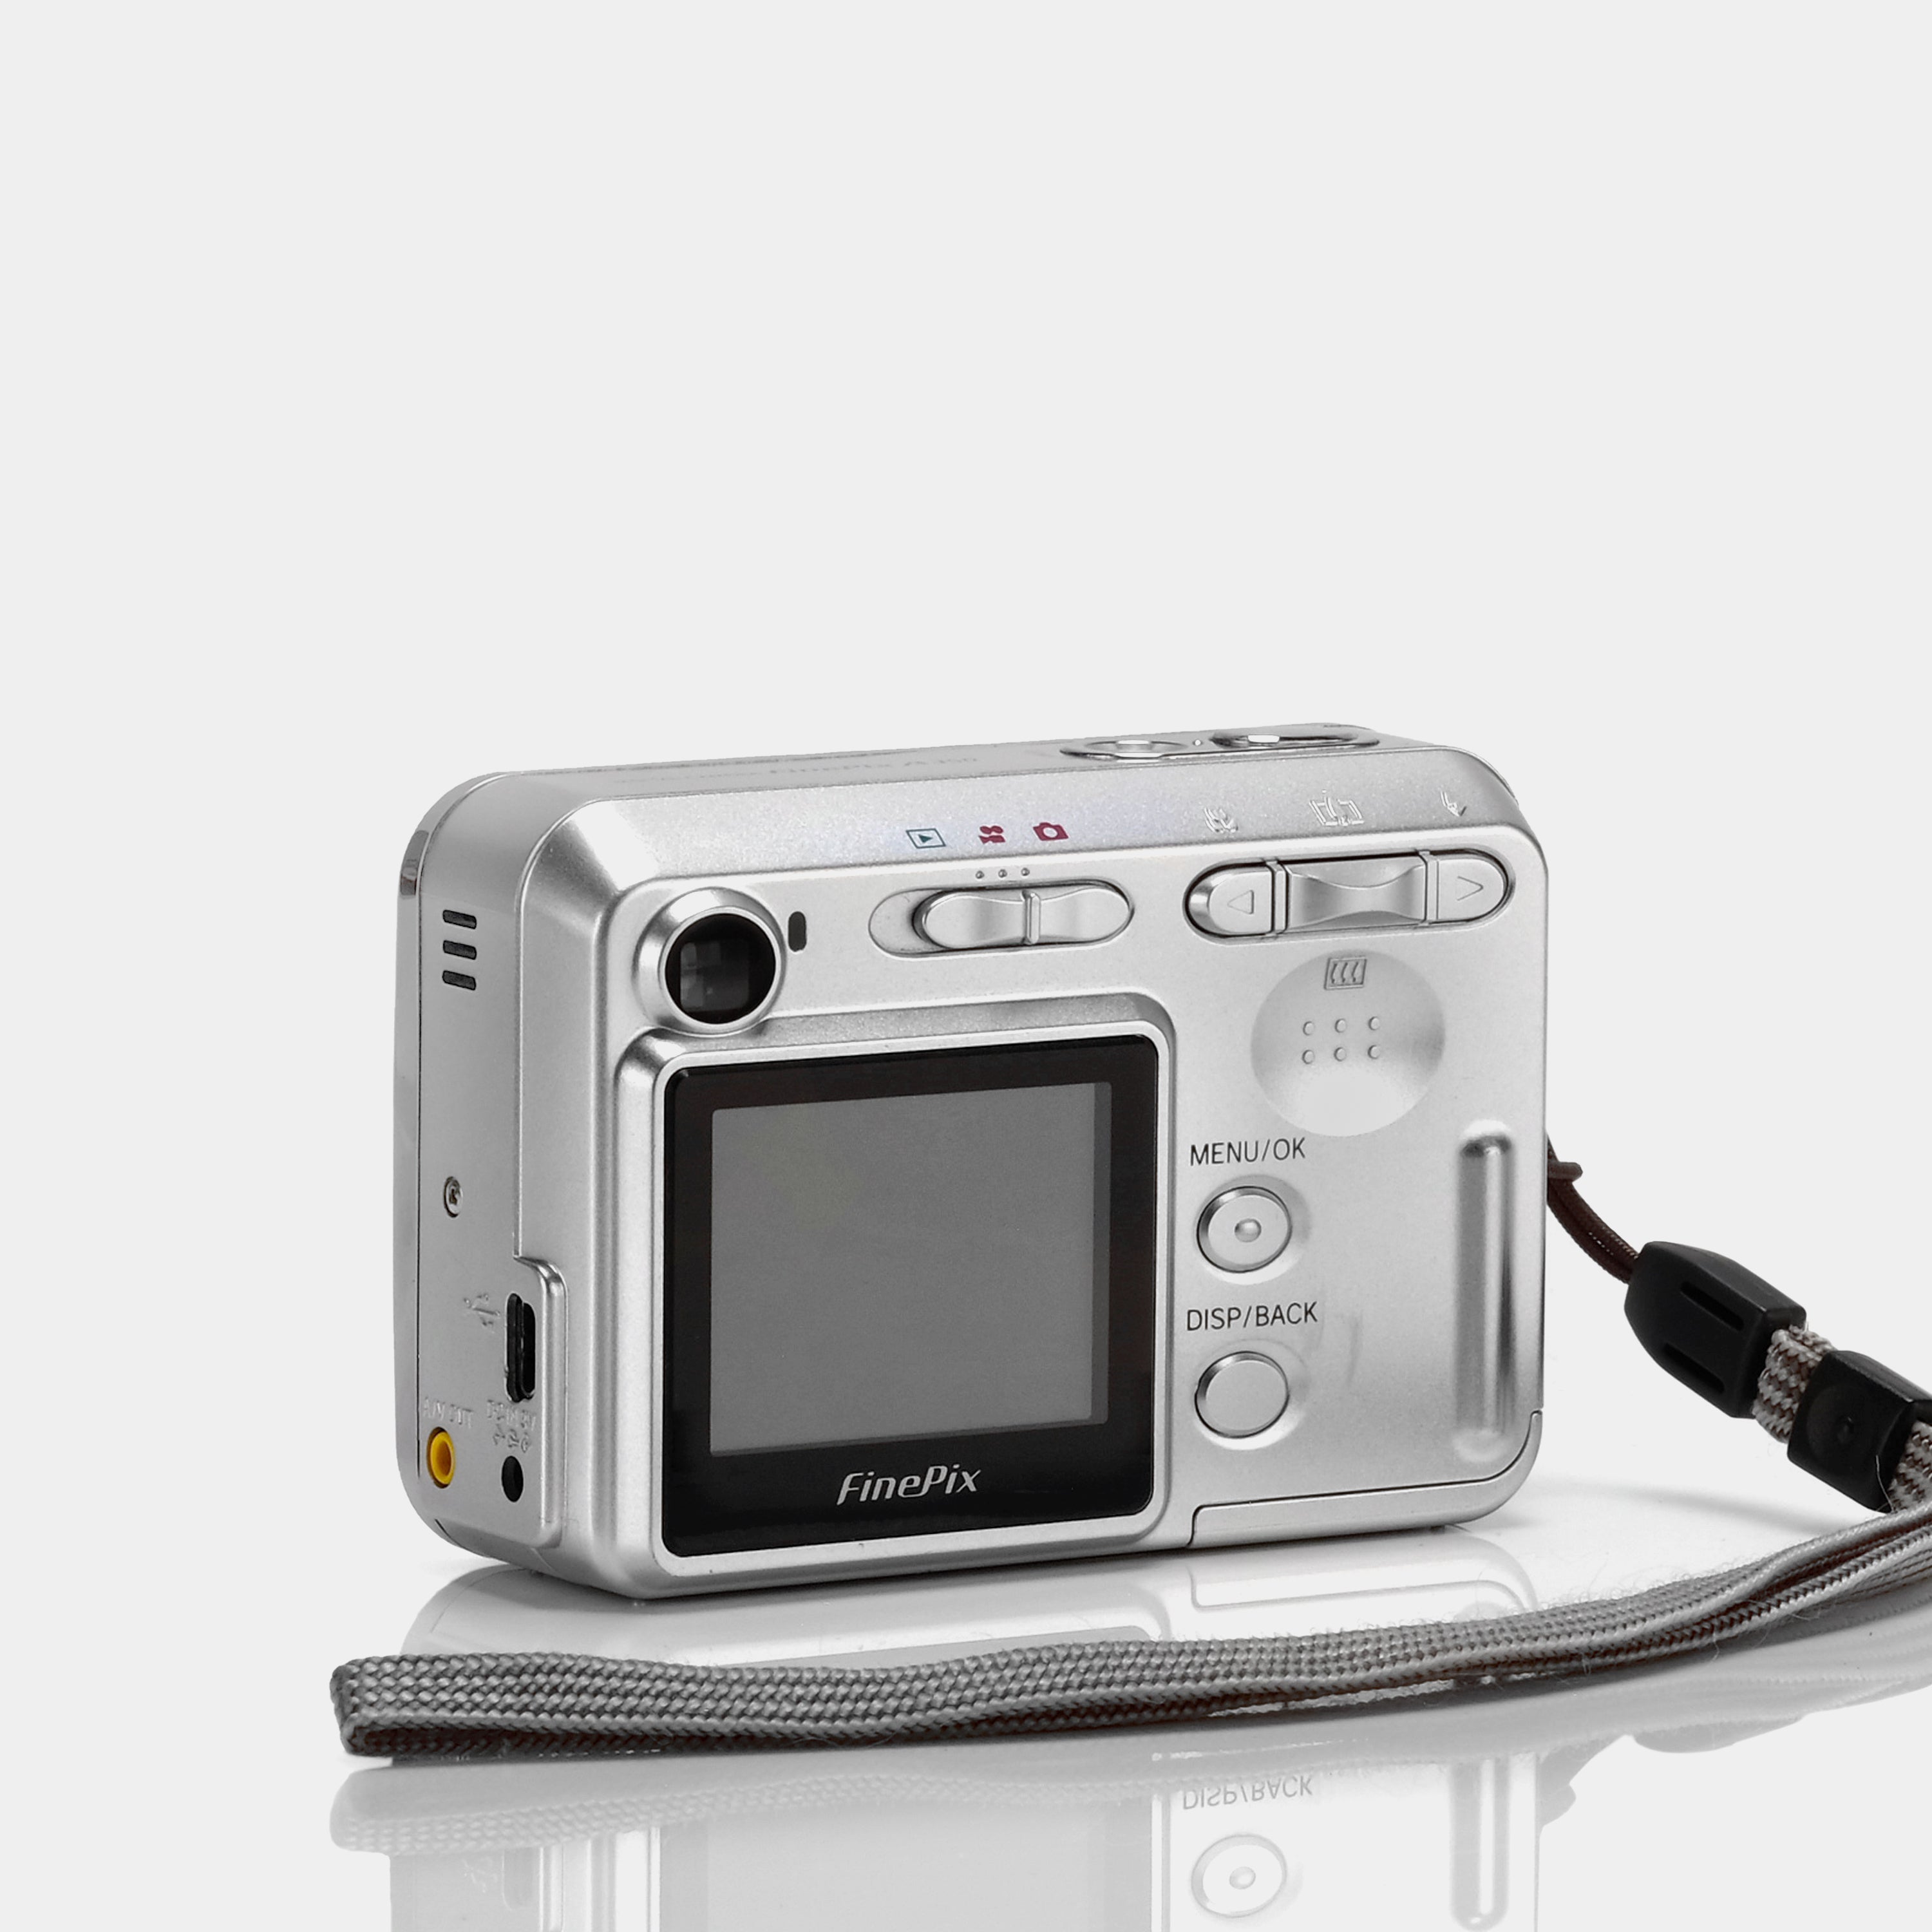 Fujifilm FinePix A350 Point and Shoot Digital Camera